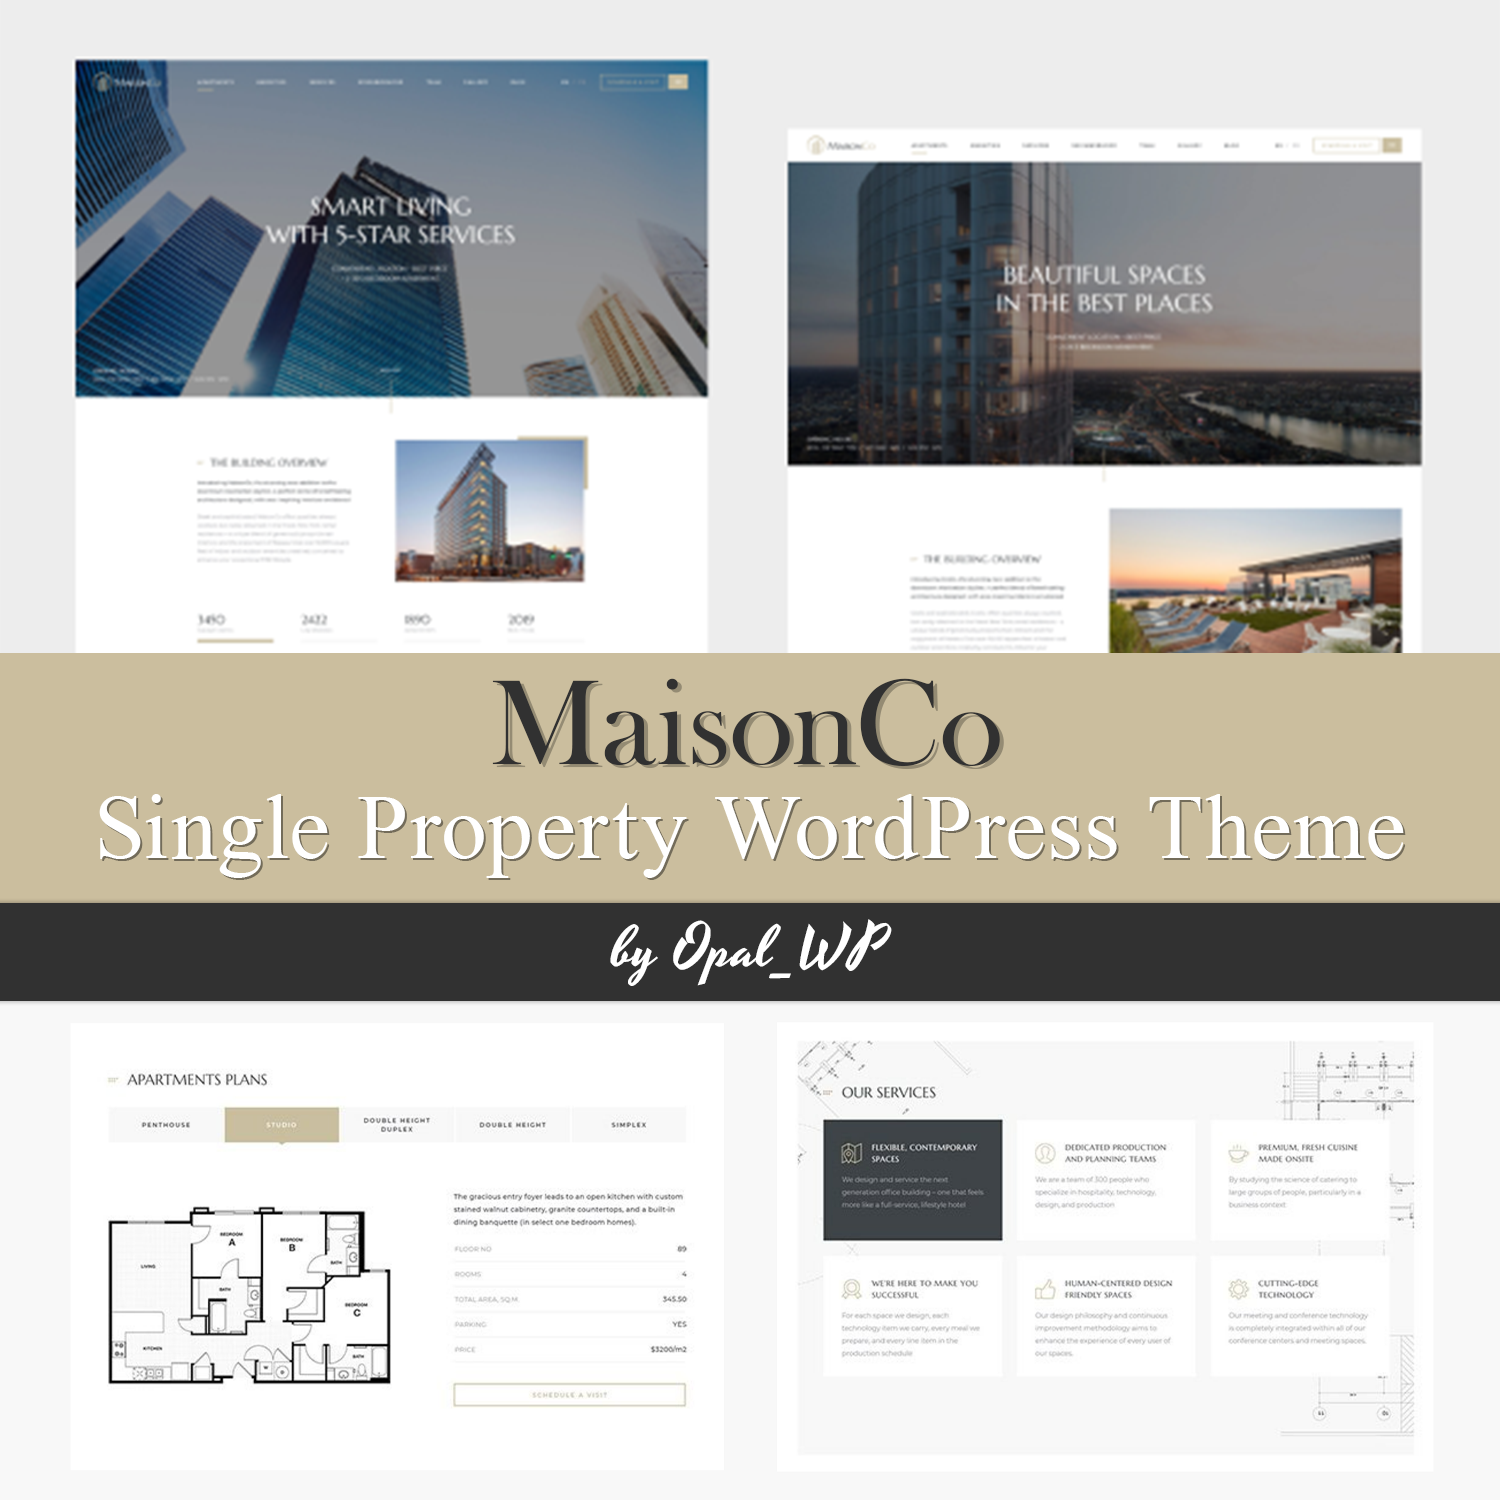 Images with maisonco single property wordpress theme.